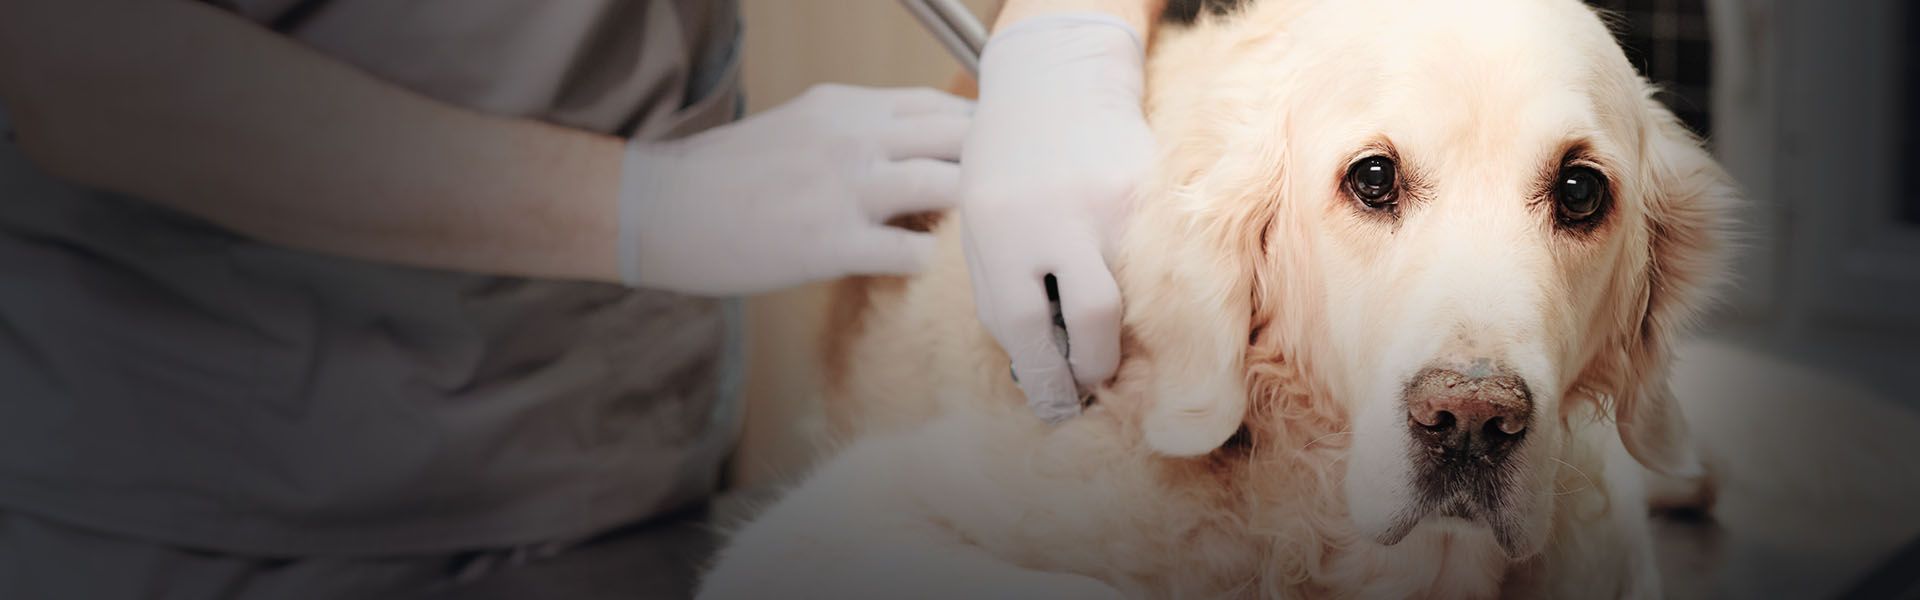 dog examined by vet listening his heart